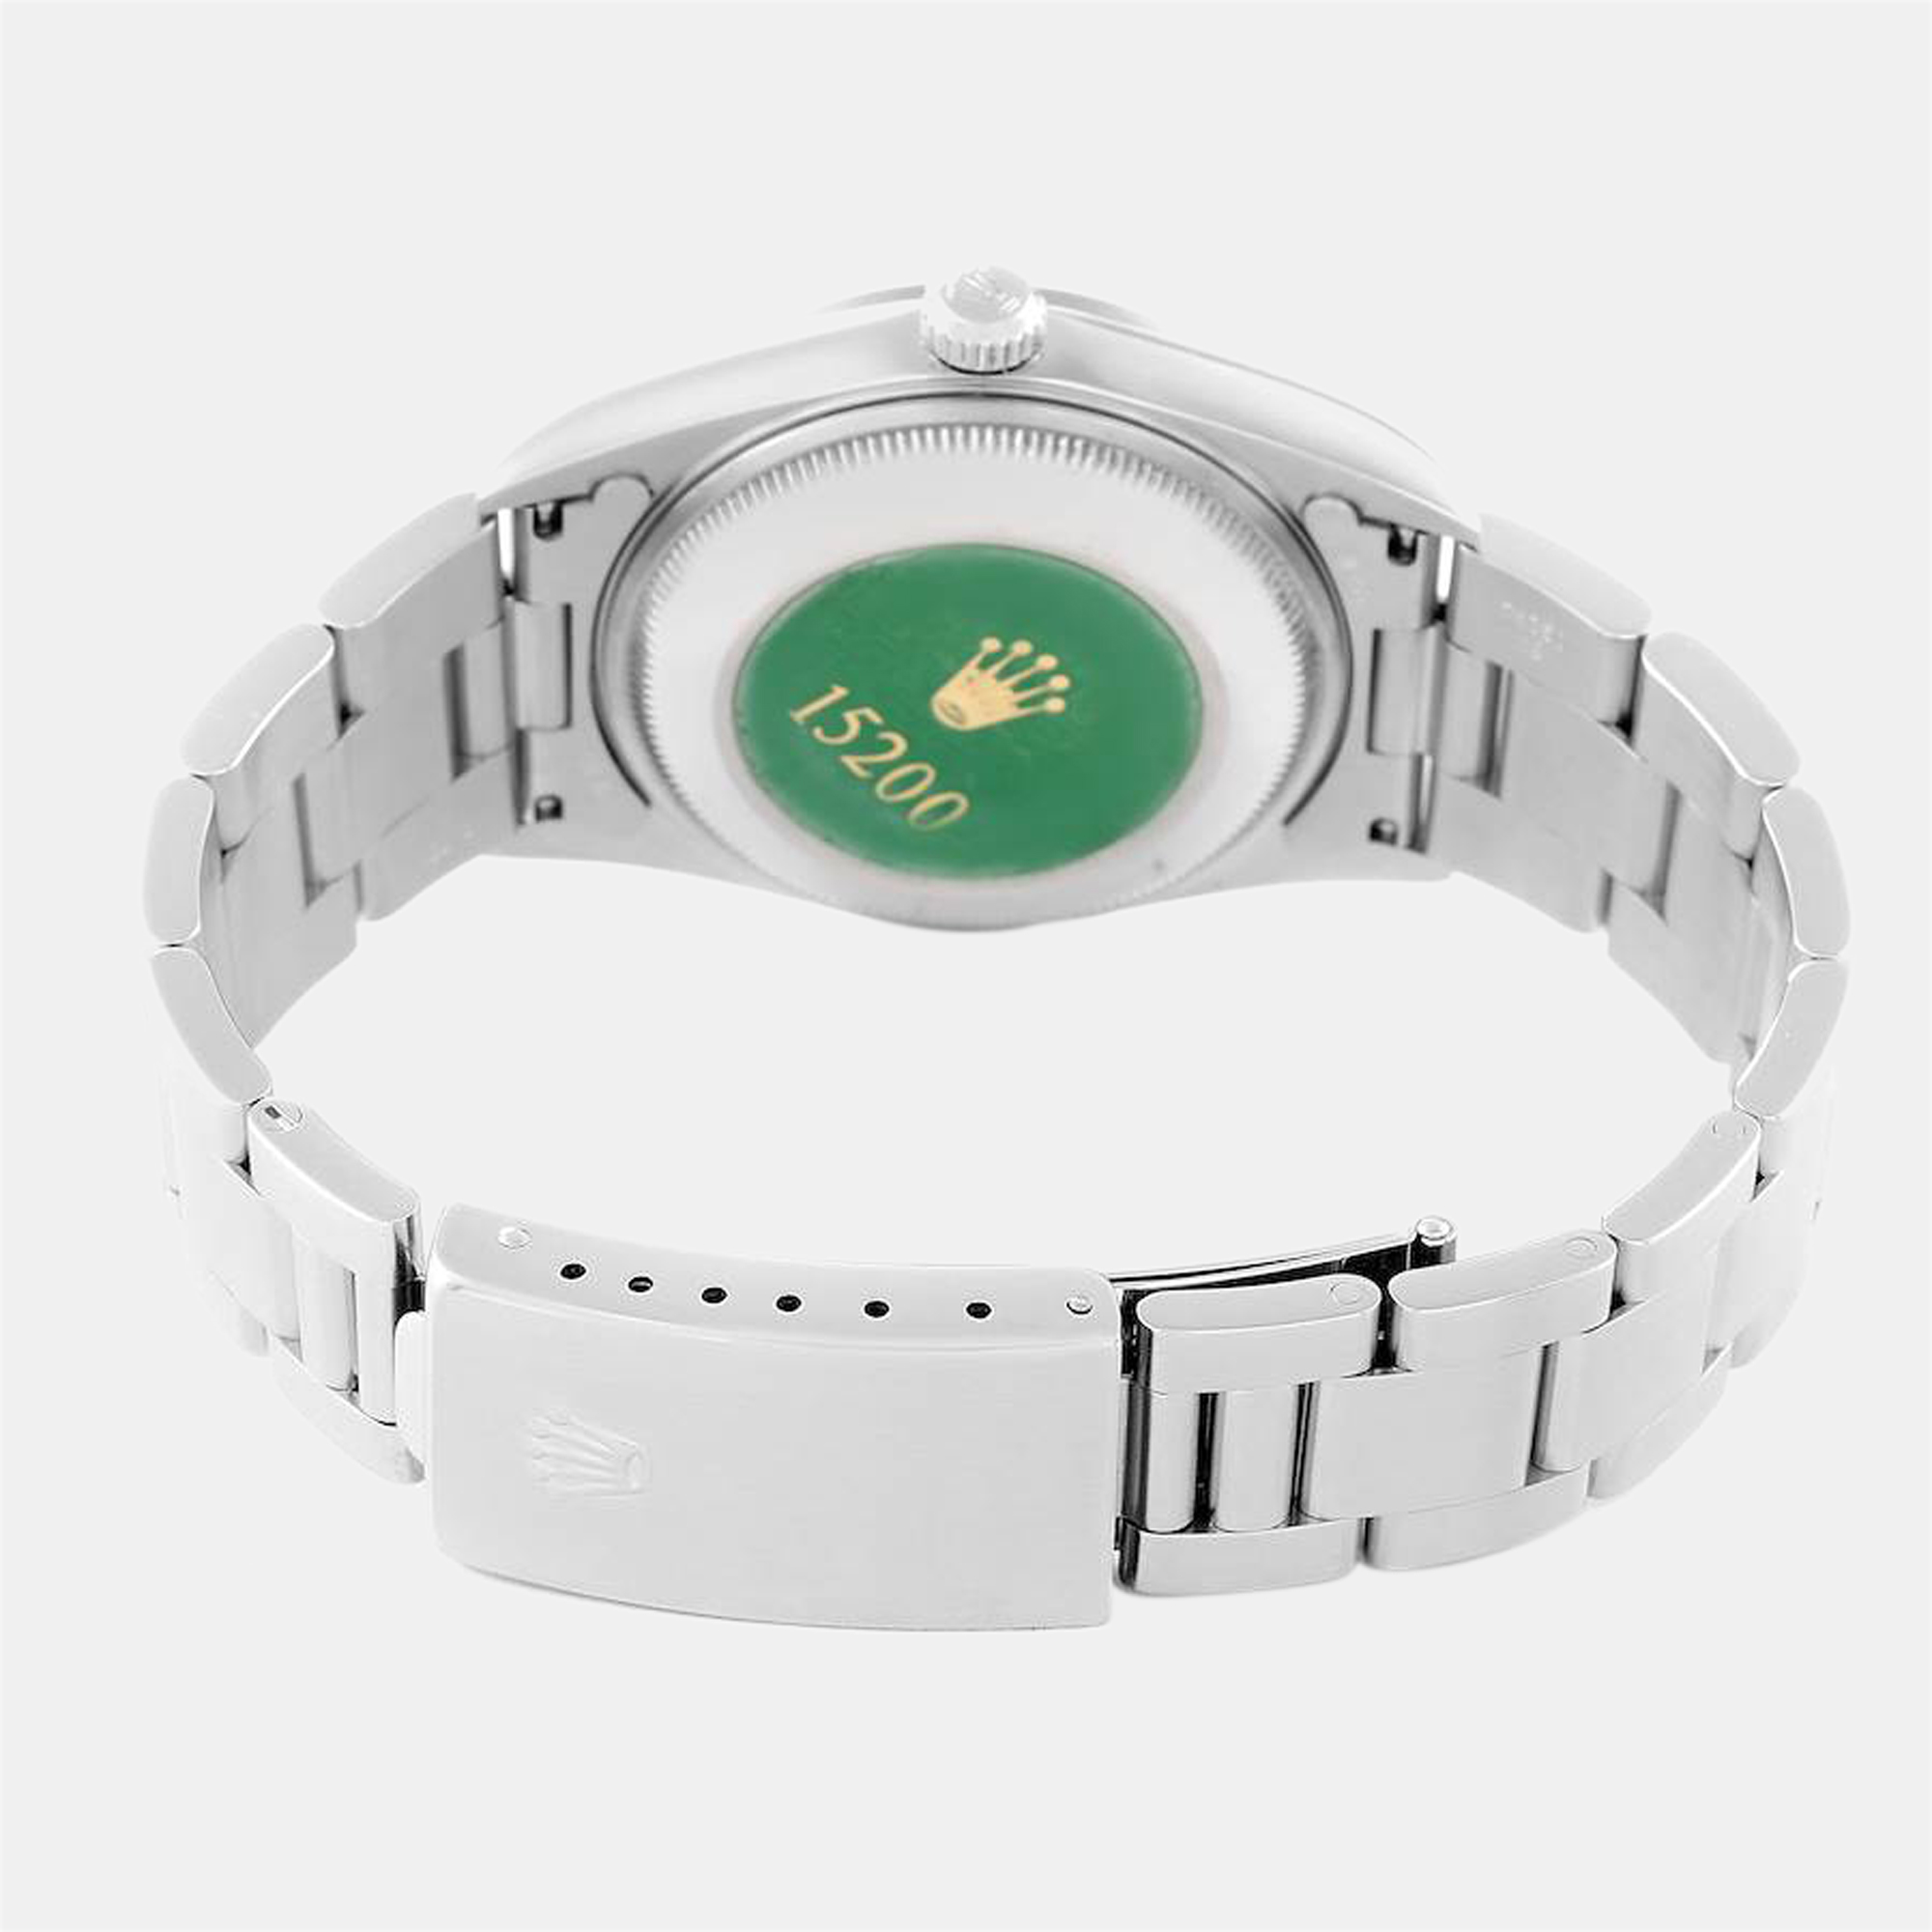 Rolex Date Salmon Dial Smooth Bezel Steel Men's Watch 15200 34 Mm